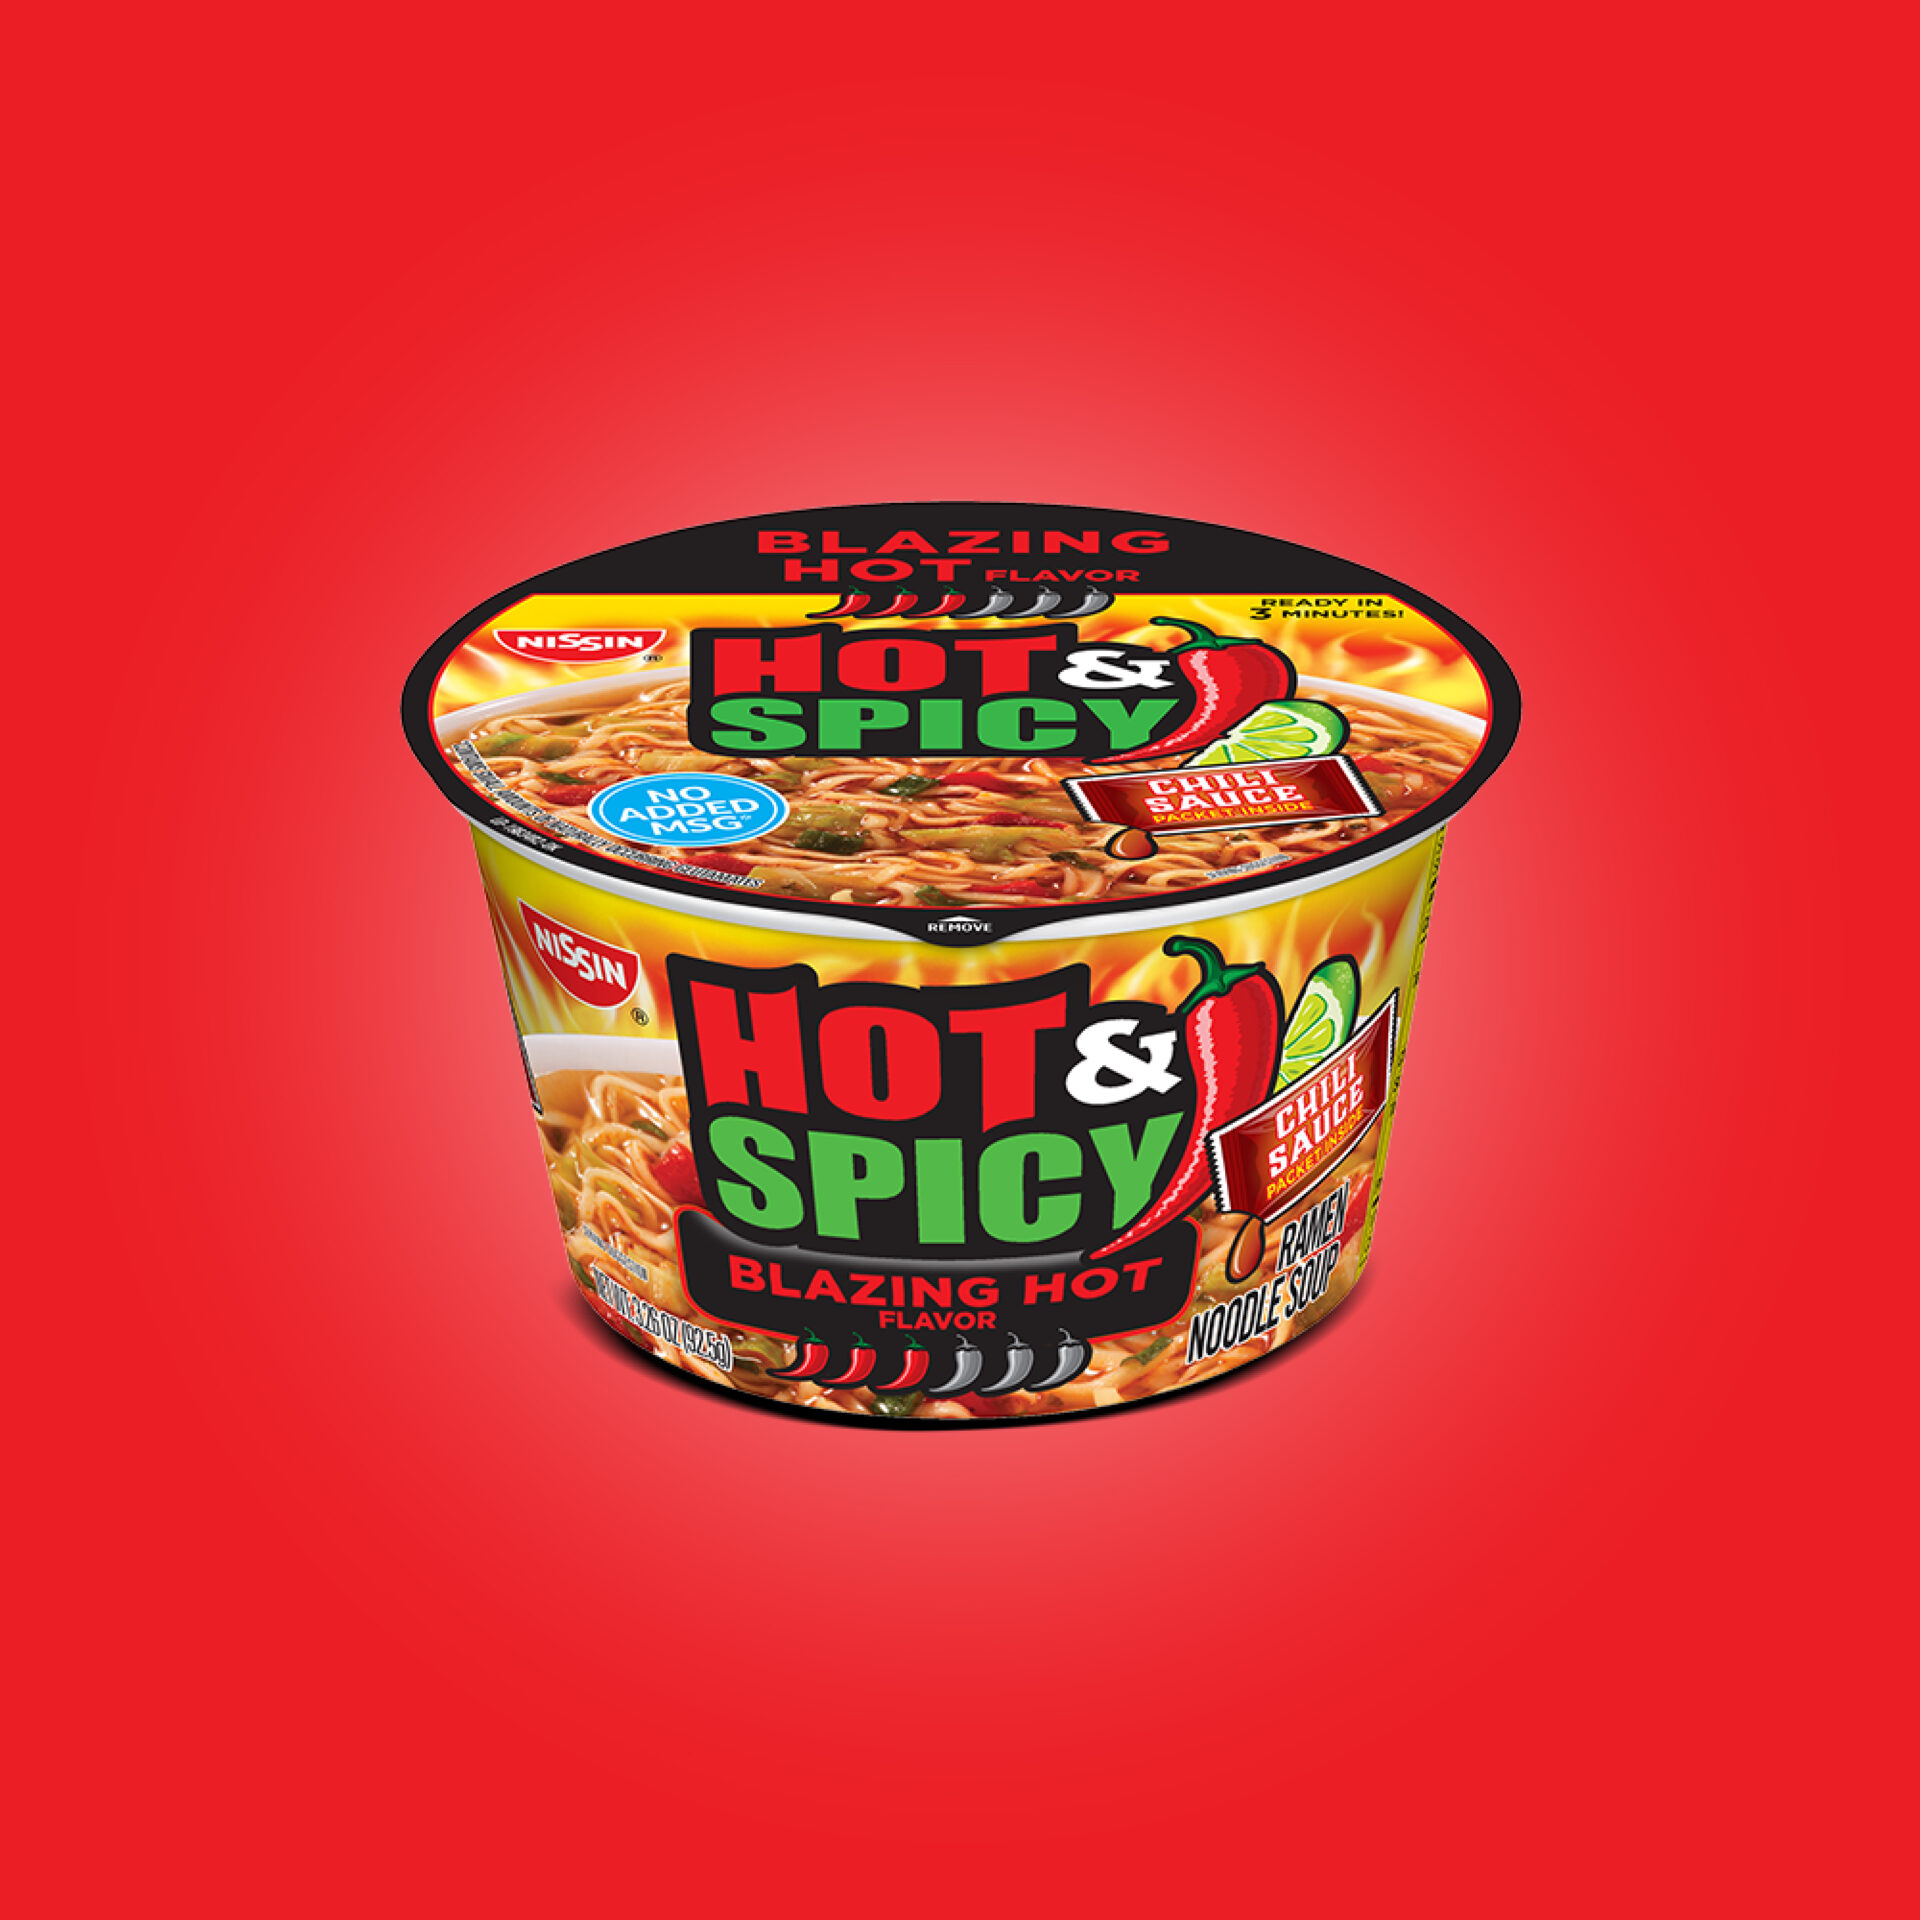 Hot & Spicy Blazing Hot - Nissin Food